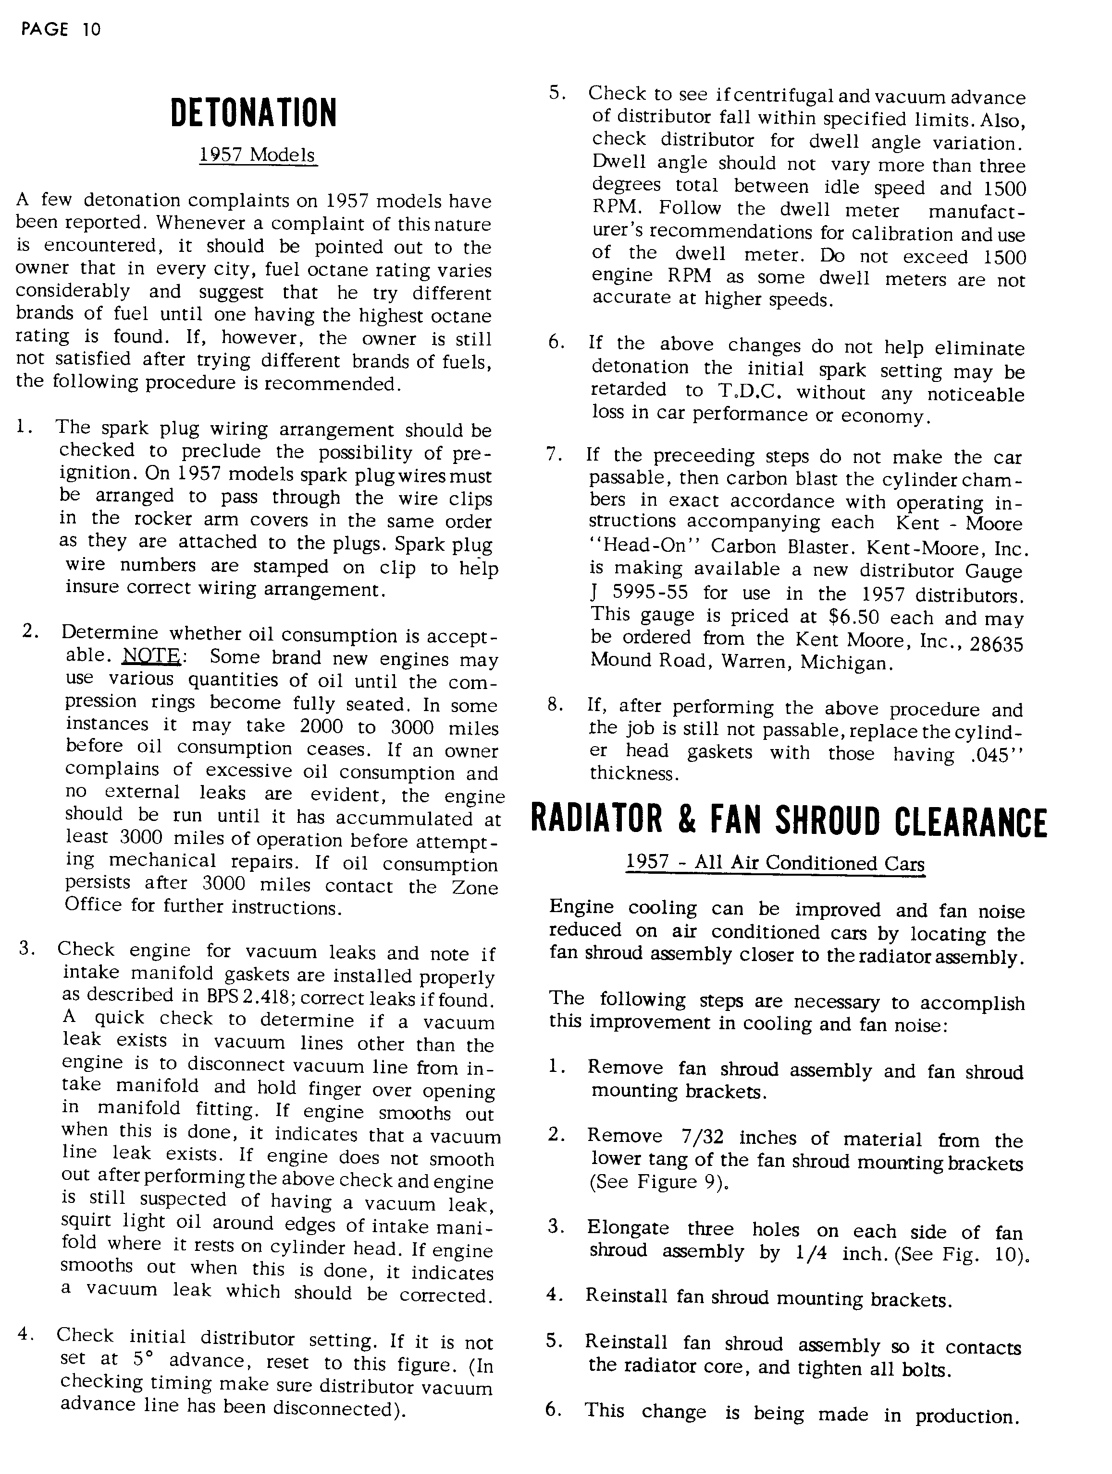 n_1957 Buick Product Service  Bulletins-017-017.jpg